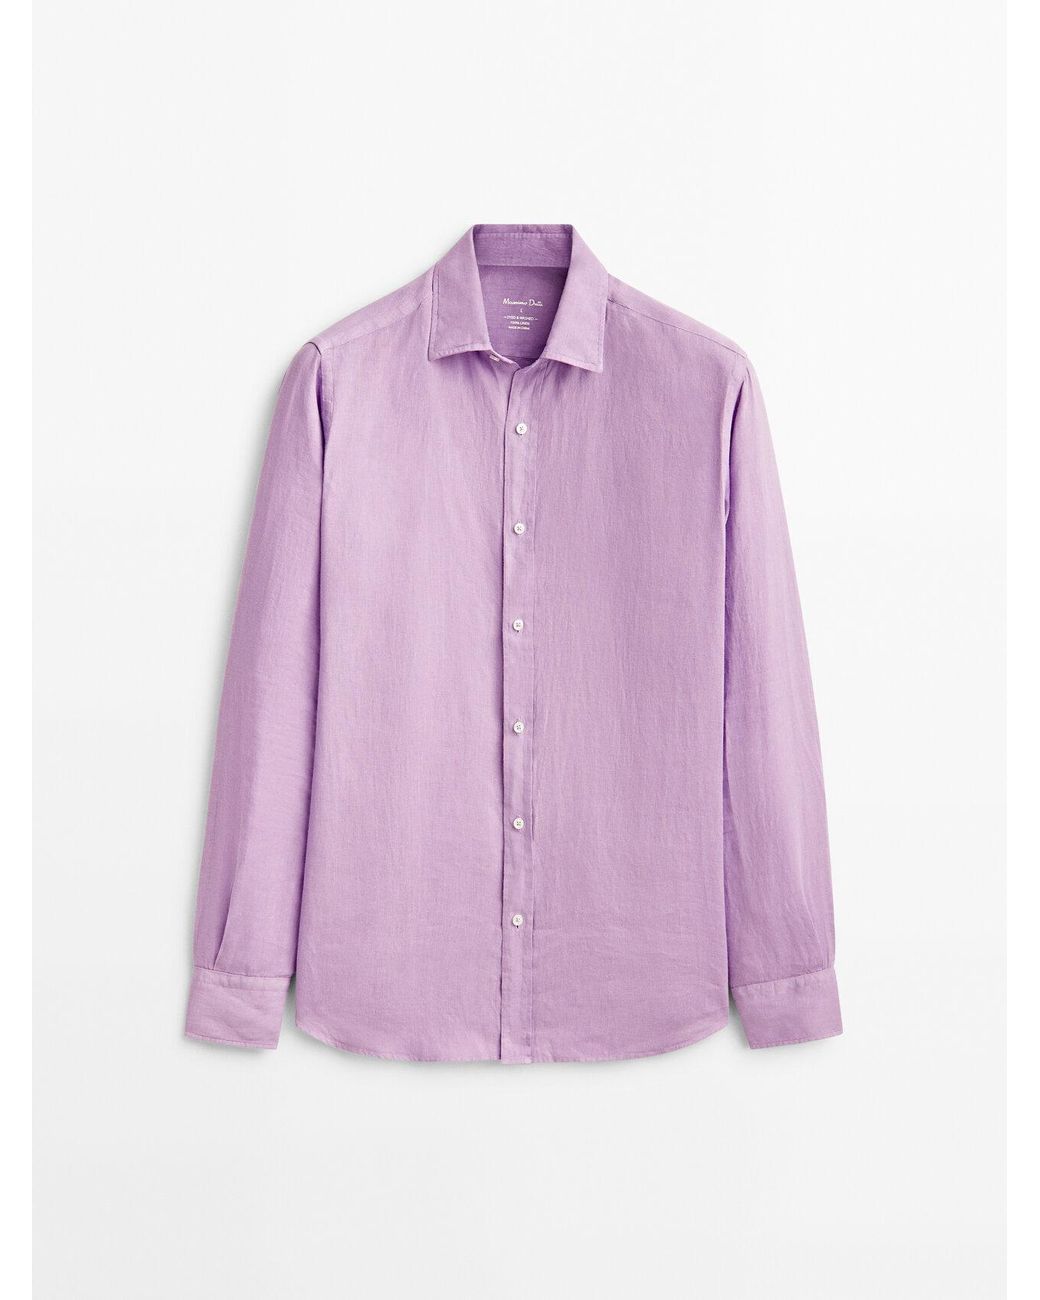 MASSIMO DUTTI 100% Linen Slim-fit Shirt in Purple for Men | Lyst